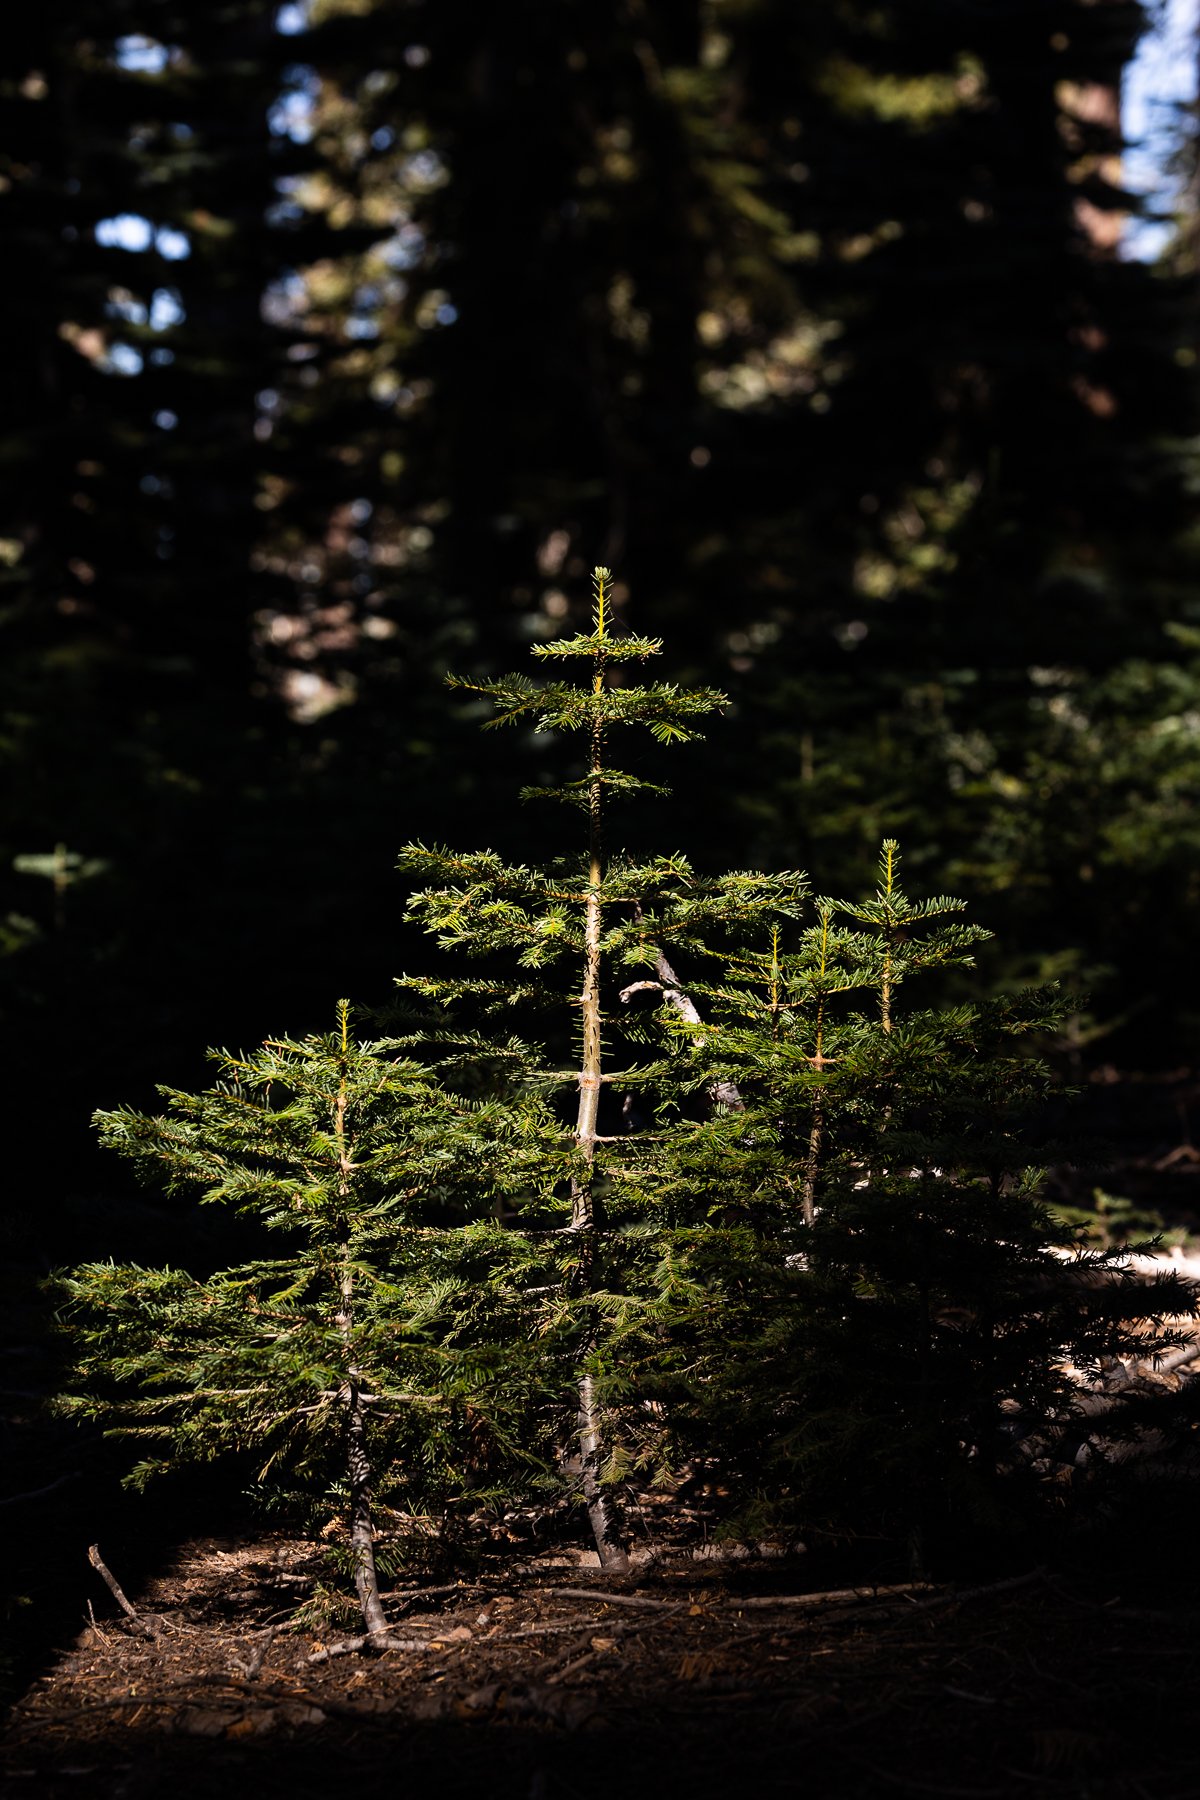 trees-details-pine-saplings-growing-kings-canyon-national-park-vegetation-flora-local-california.jpg